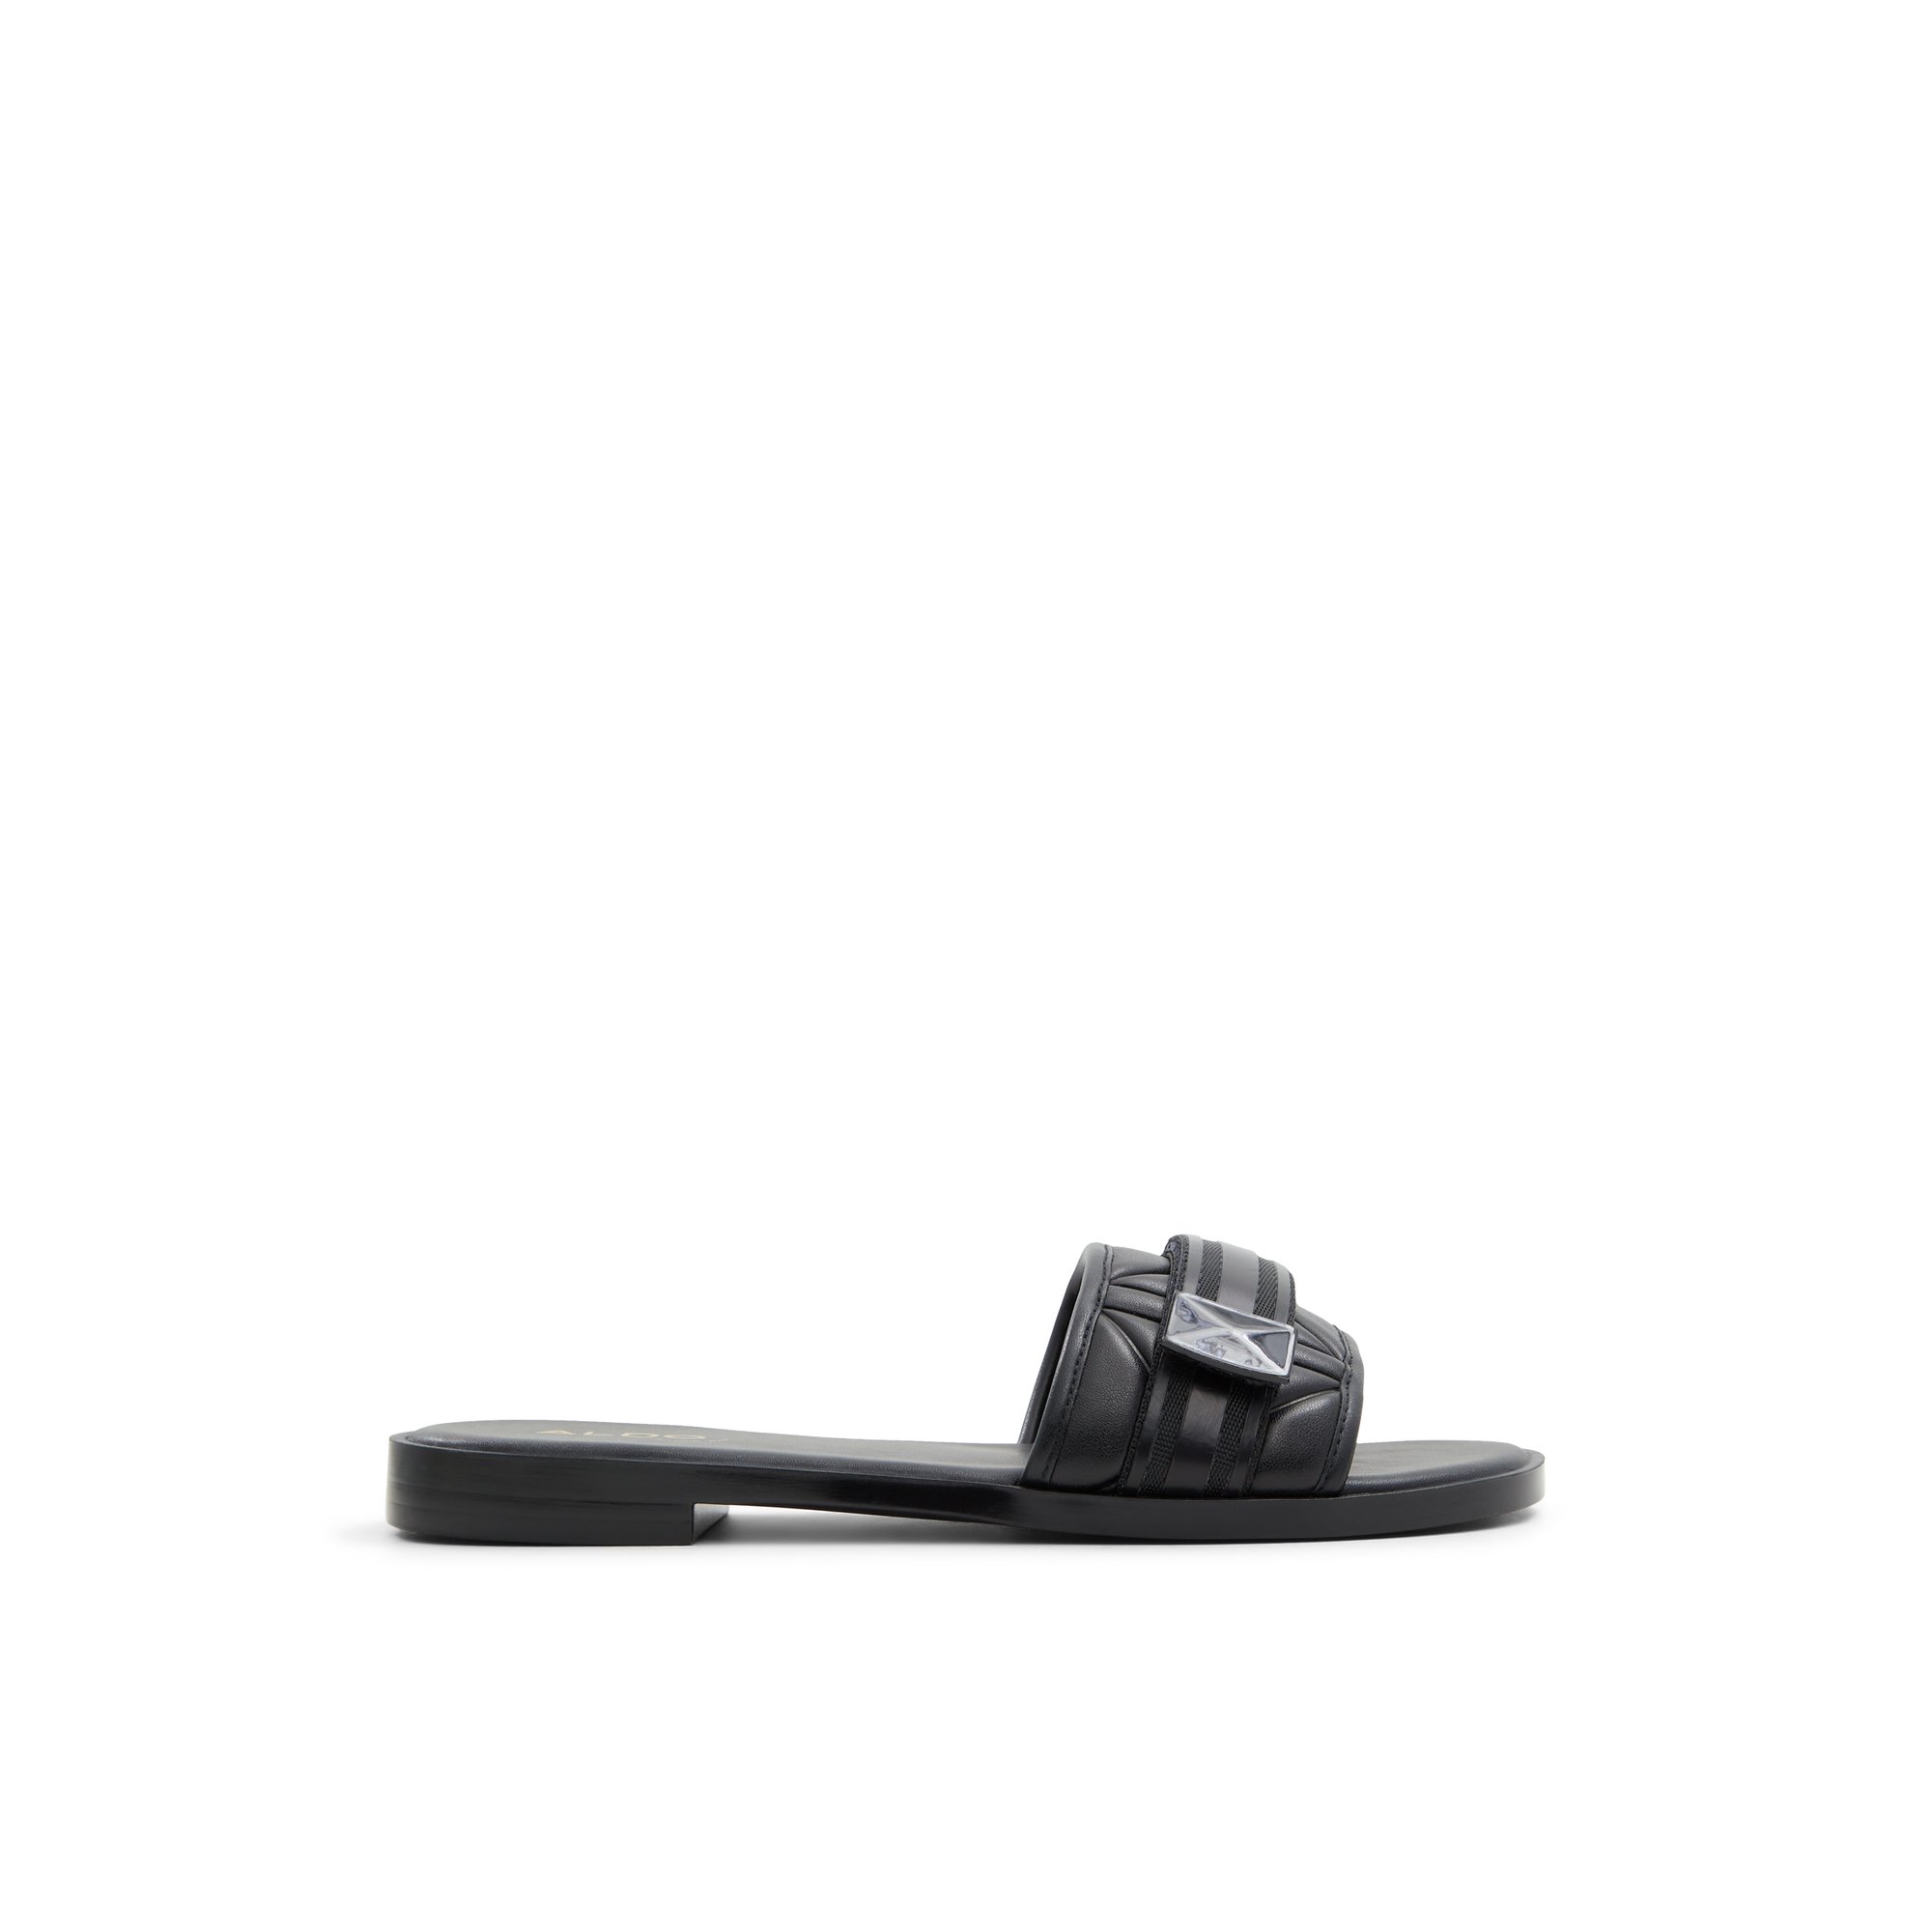 ALDO Mana - Women's Sandals Flats - Black